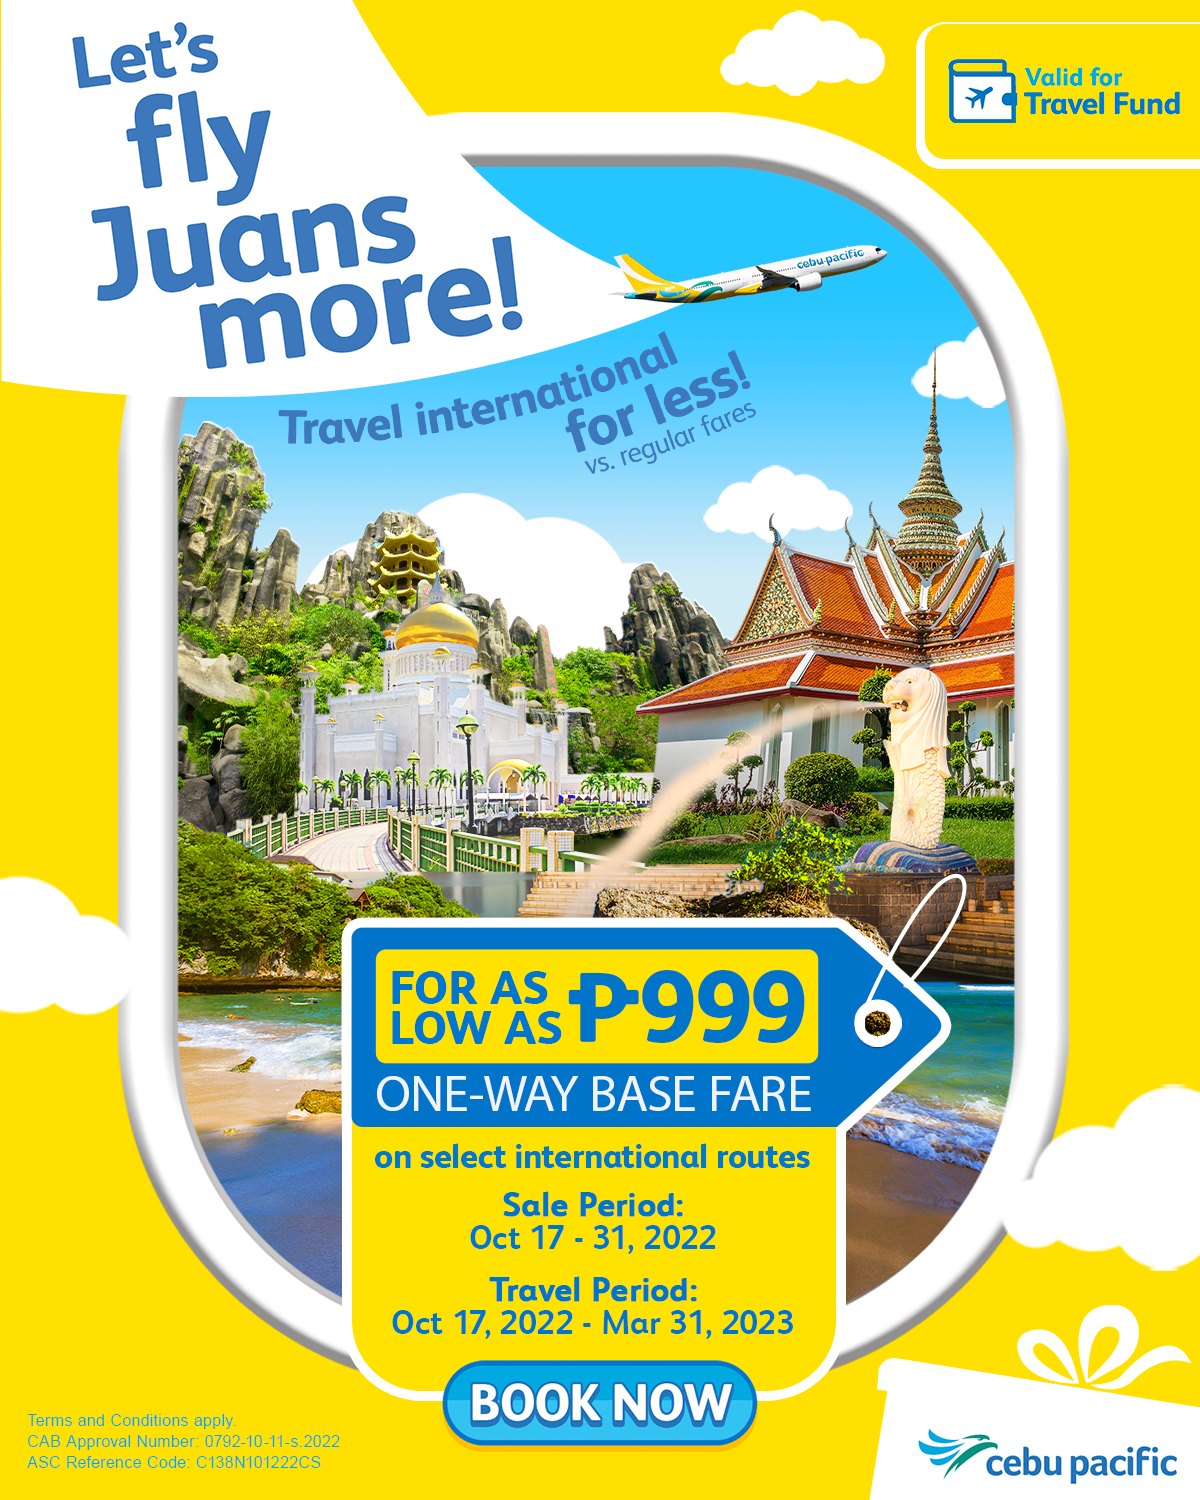 Cebu Pacific Let's Fly Juans More Promo (October 17, 2022) Cebu